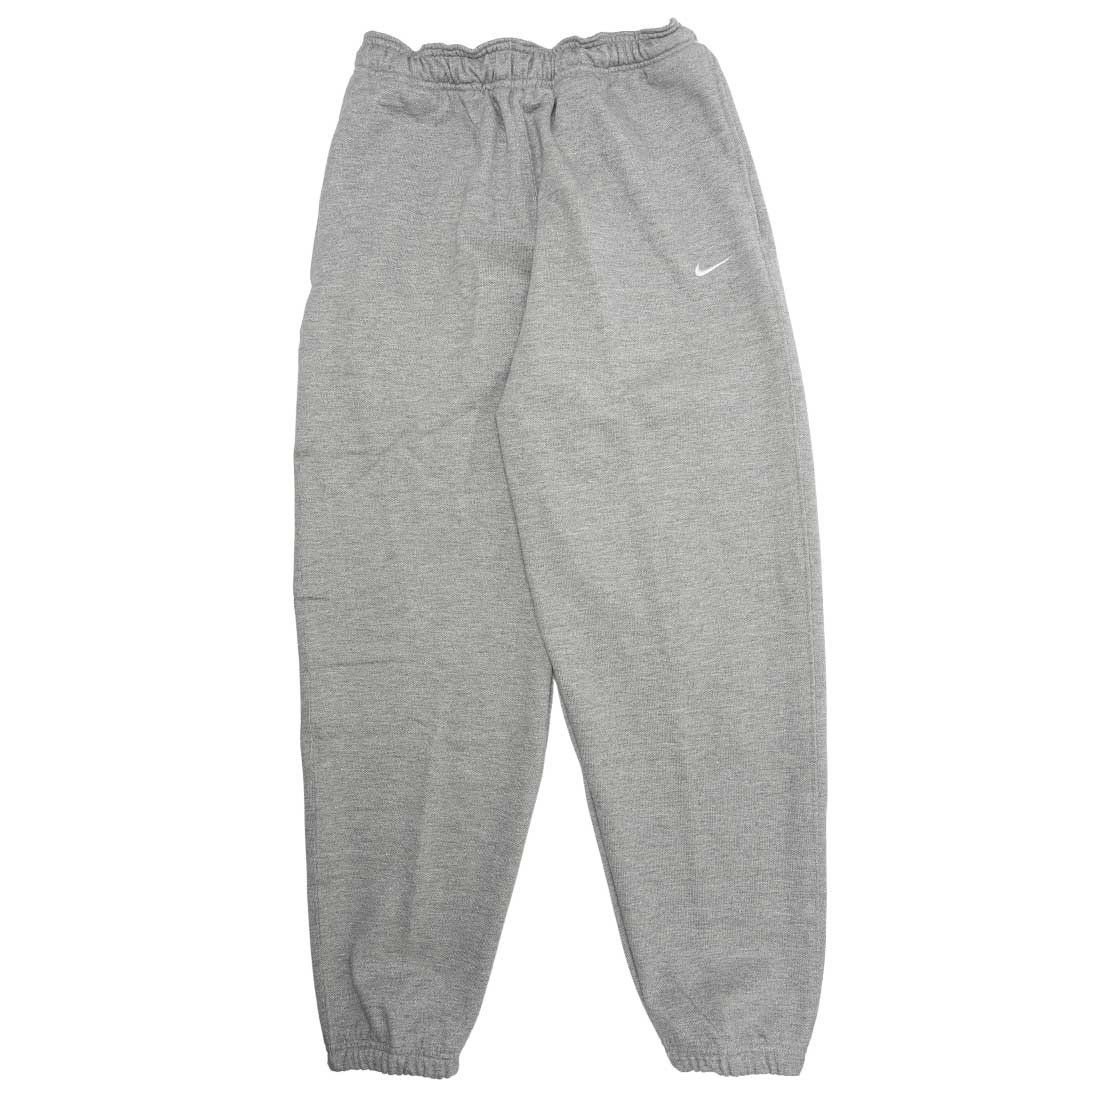 Nike Men Made In The Usa Fleece Pants (dk grey heather / white)